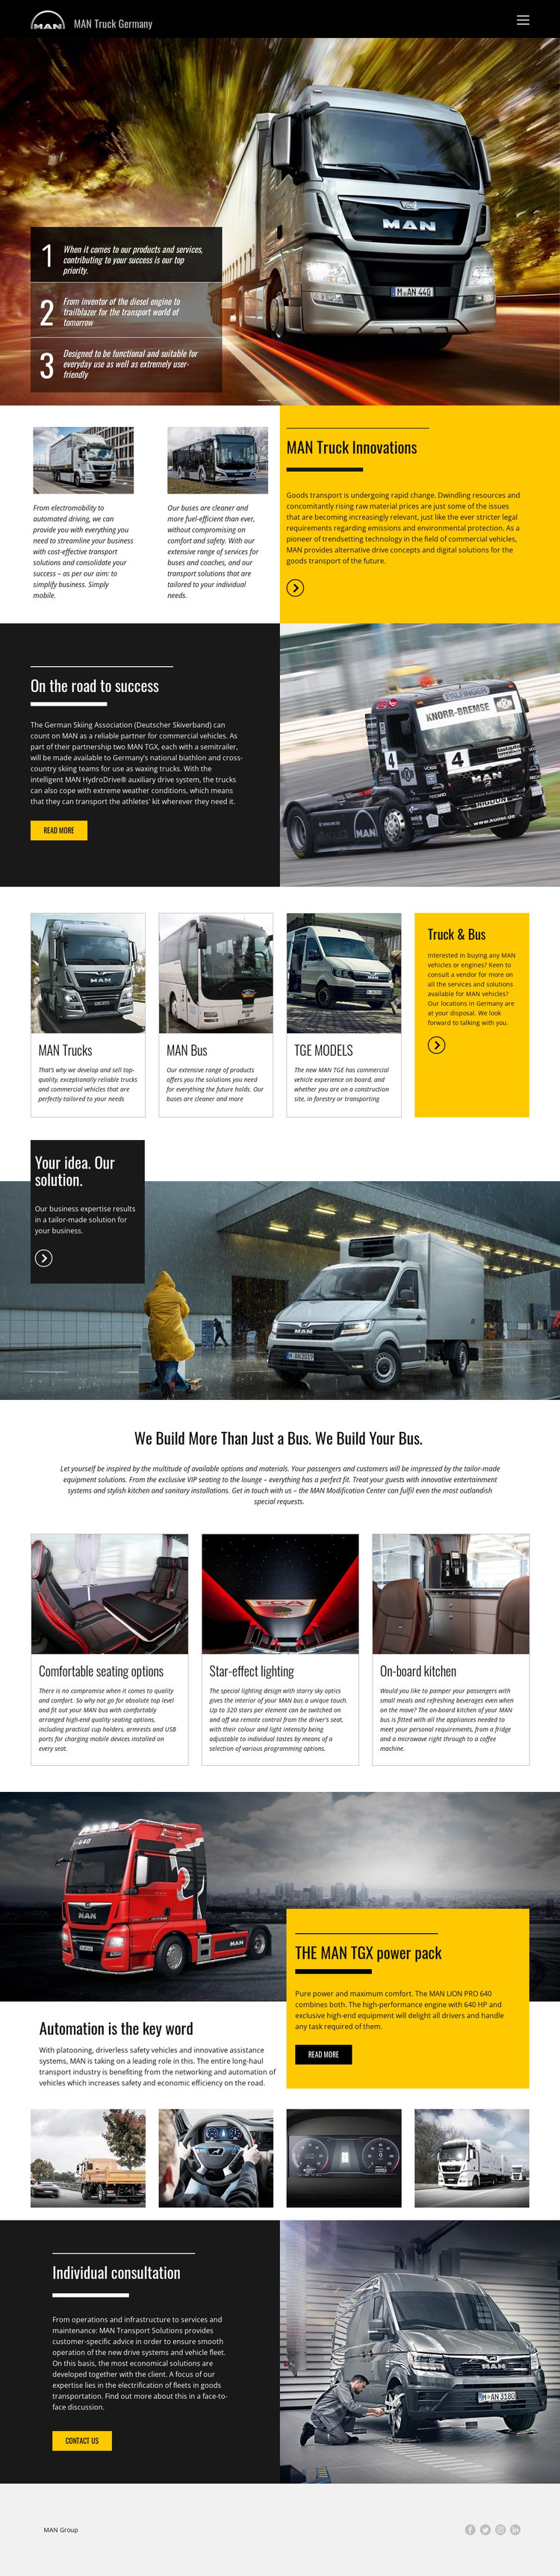 Man trucks for transportation HTML Template